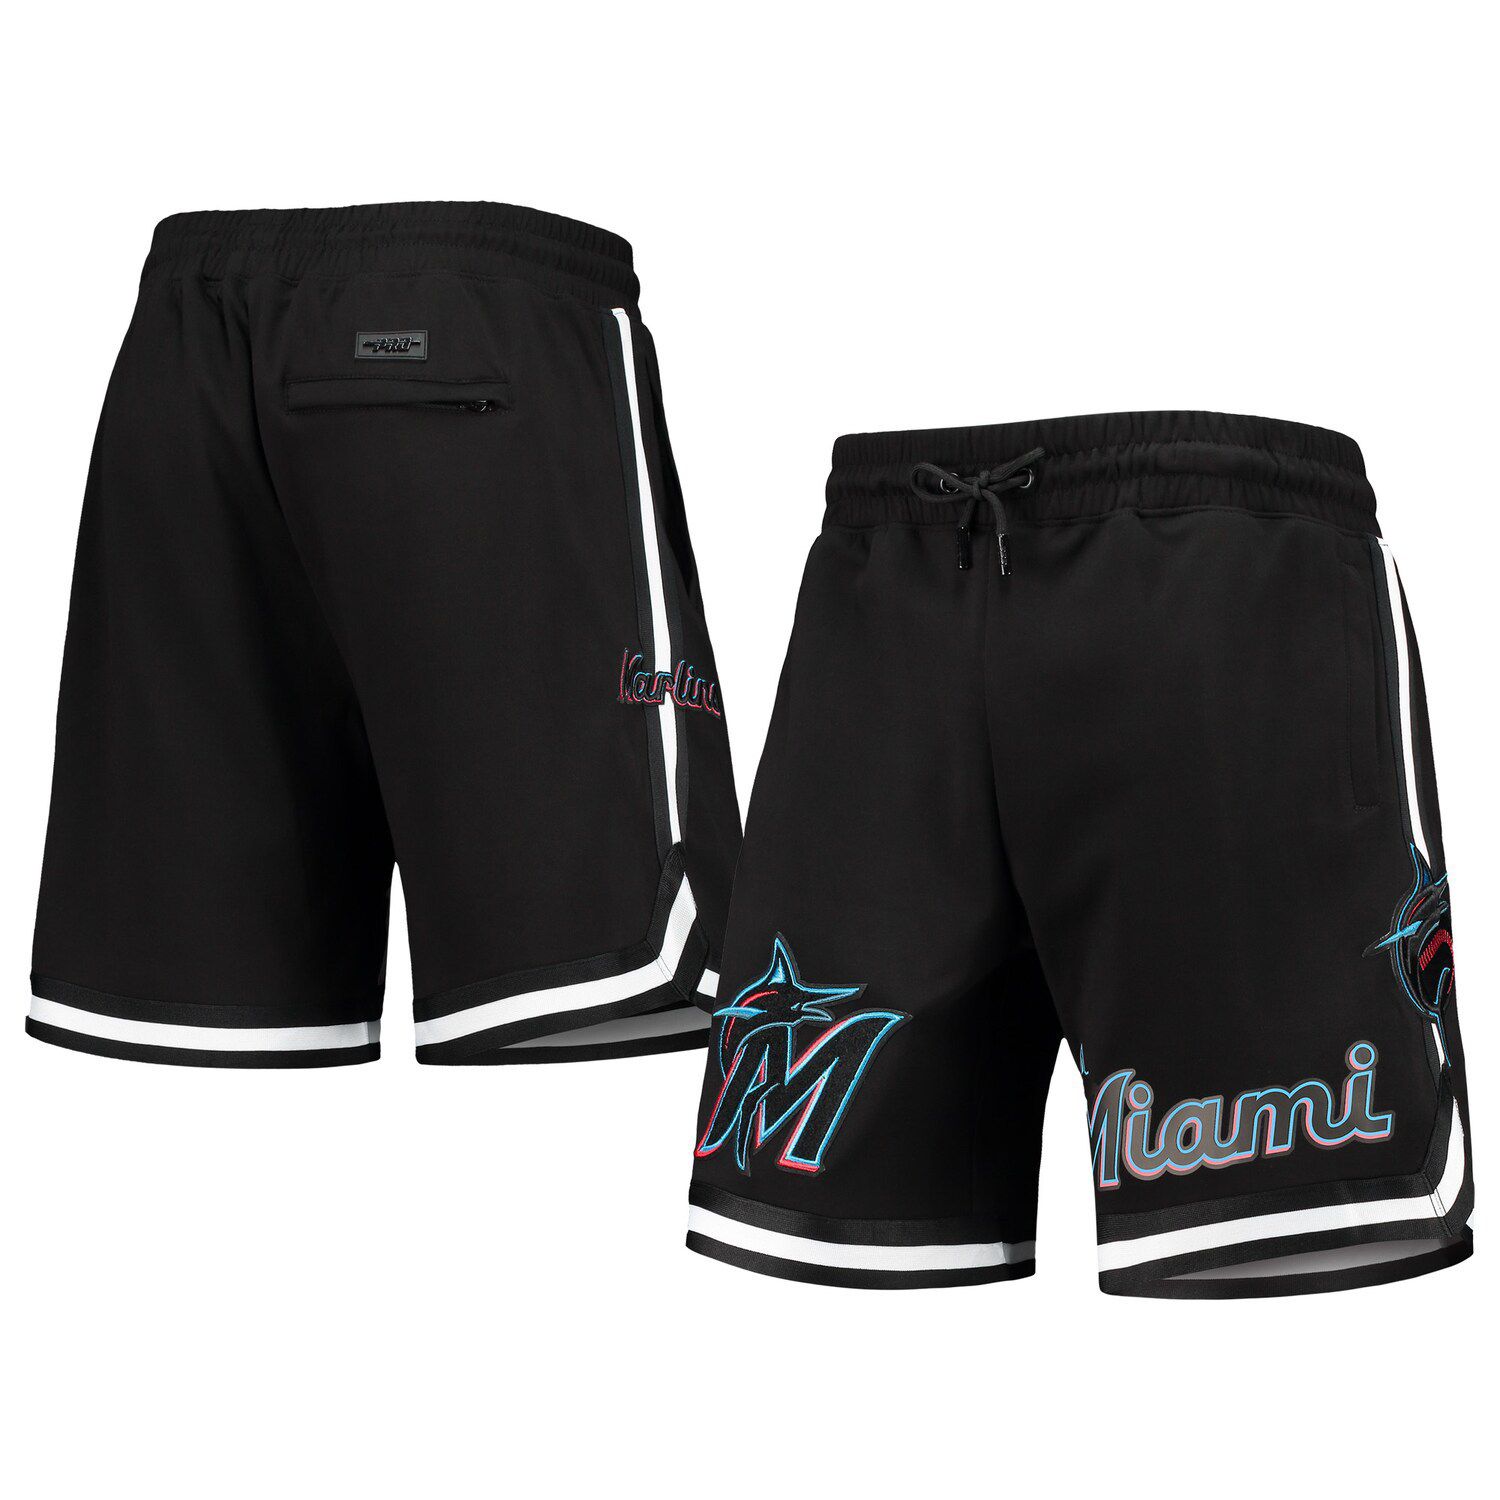 Image for Unbranded Men's Pro Standard Black Miami Marlins Team Shorts at Kohl's.